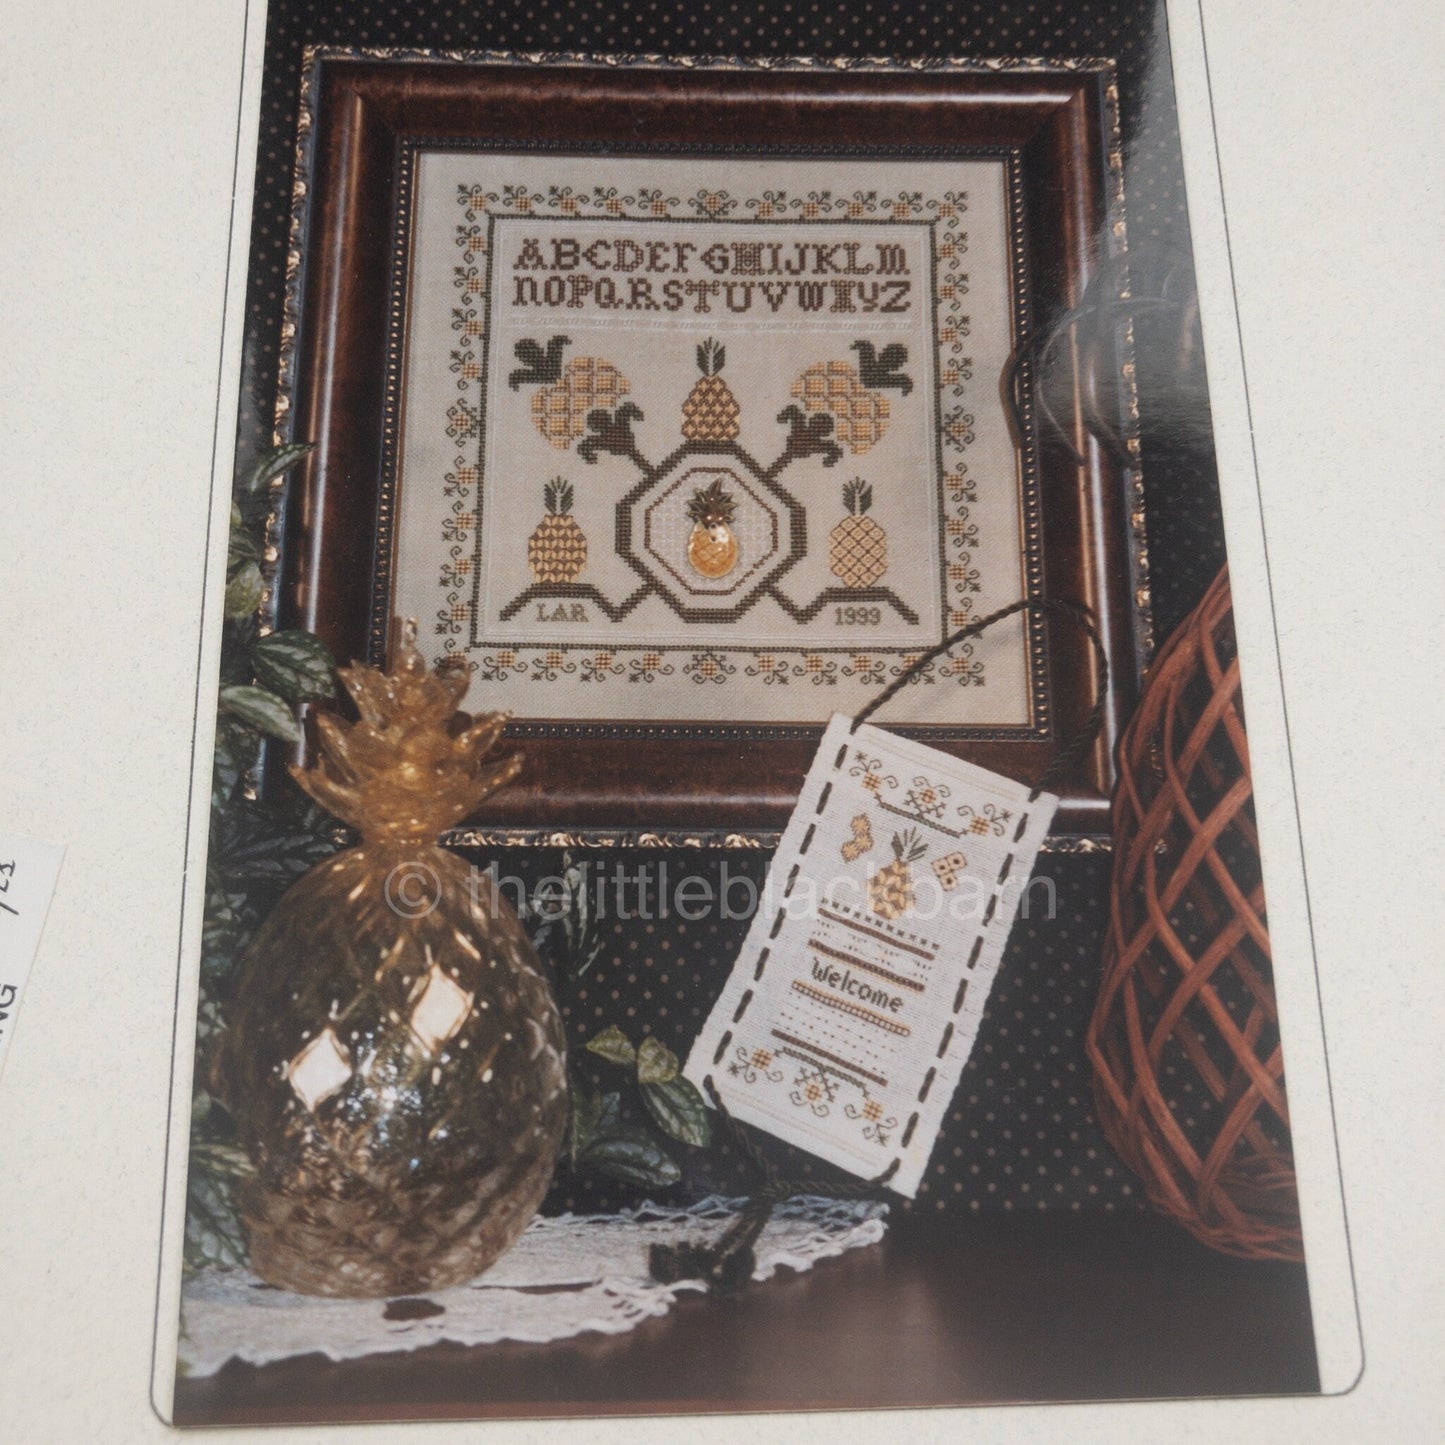 The Pineapple Sampler, Hillside Samplings, Vintage 1999, Counted Cross Stitch Design